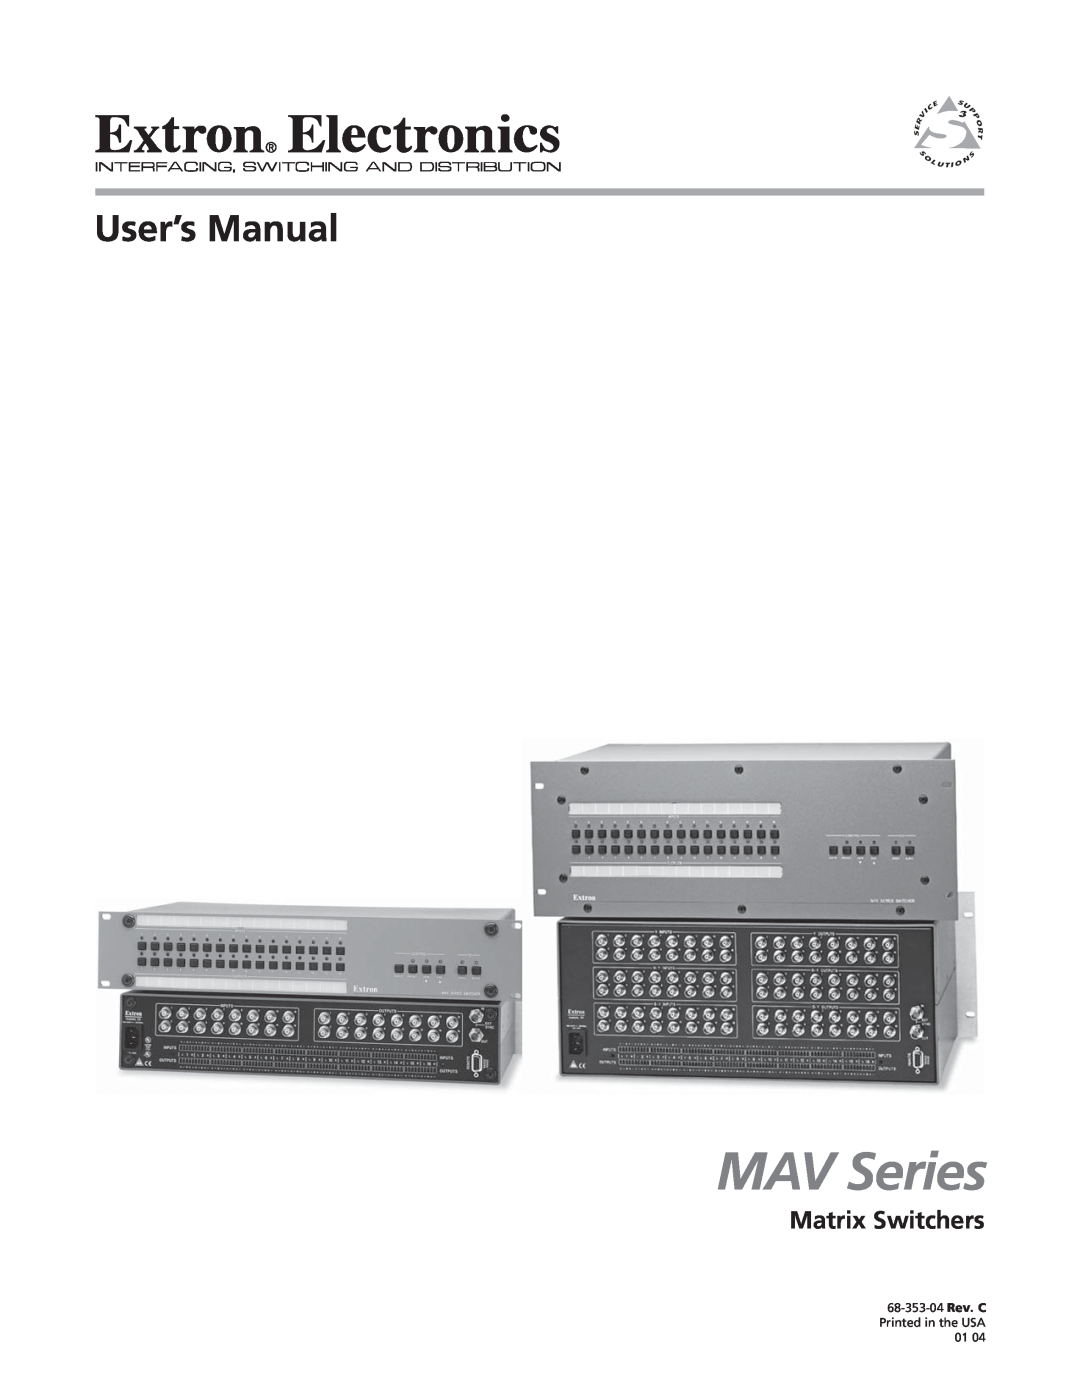 Extron electronic manual Matrix Switchers, MAV Series, 68-353-04 Rev. C Printed in the USA 